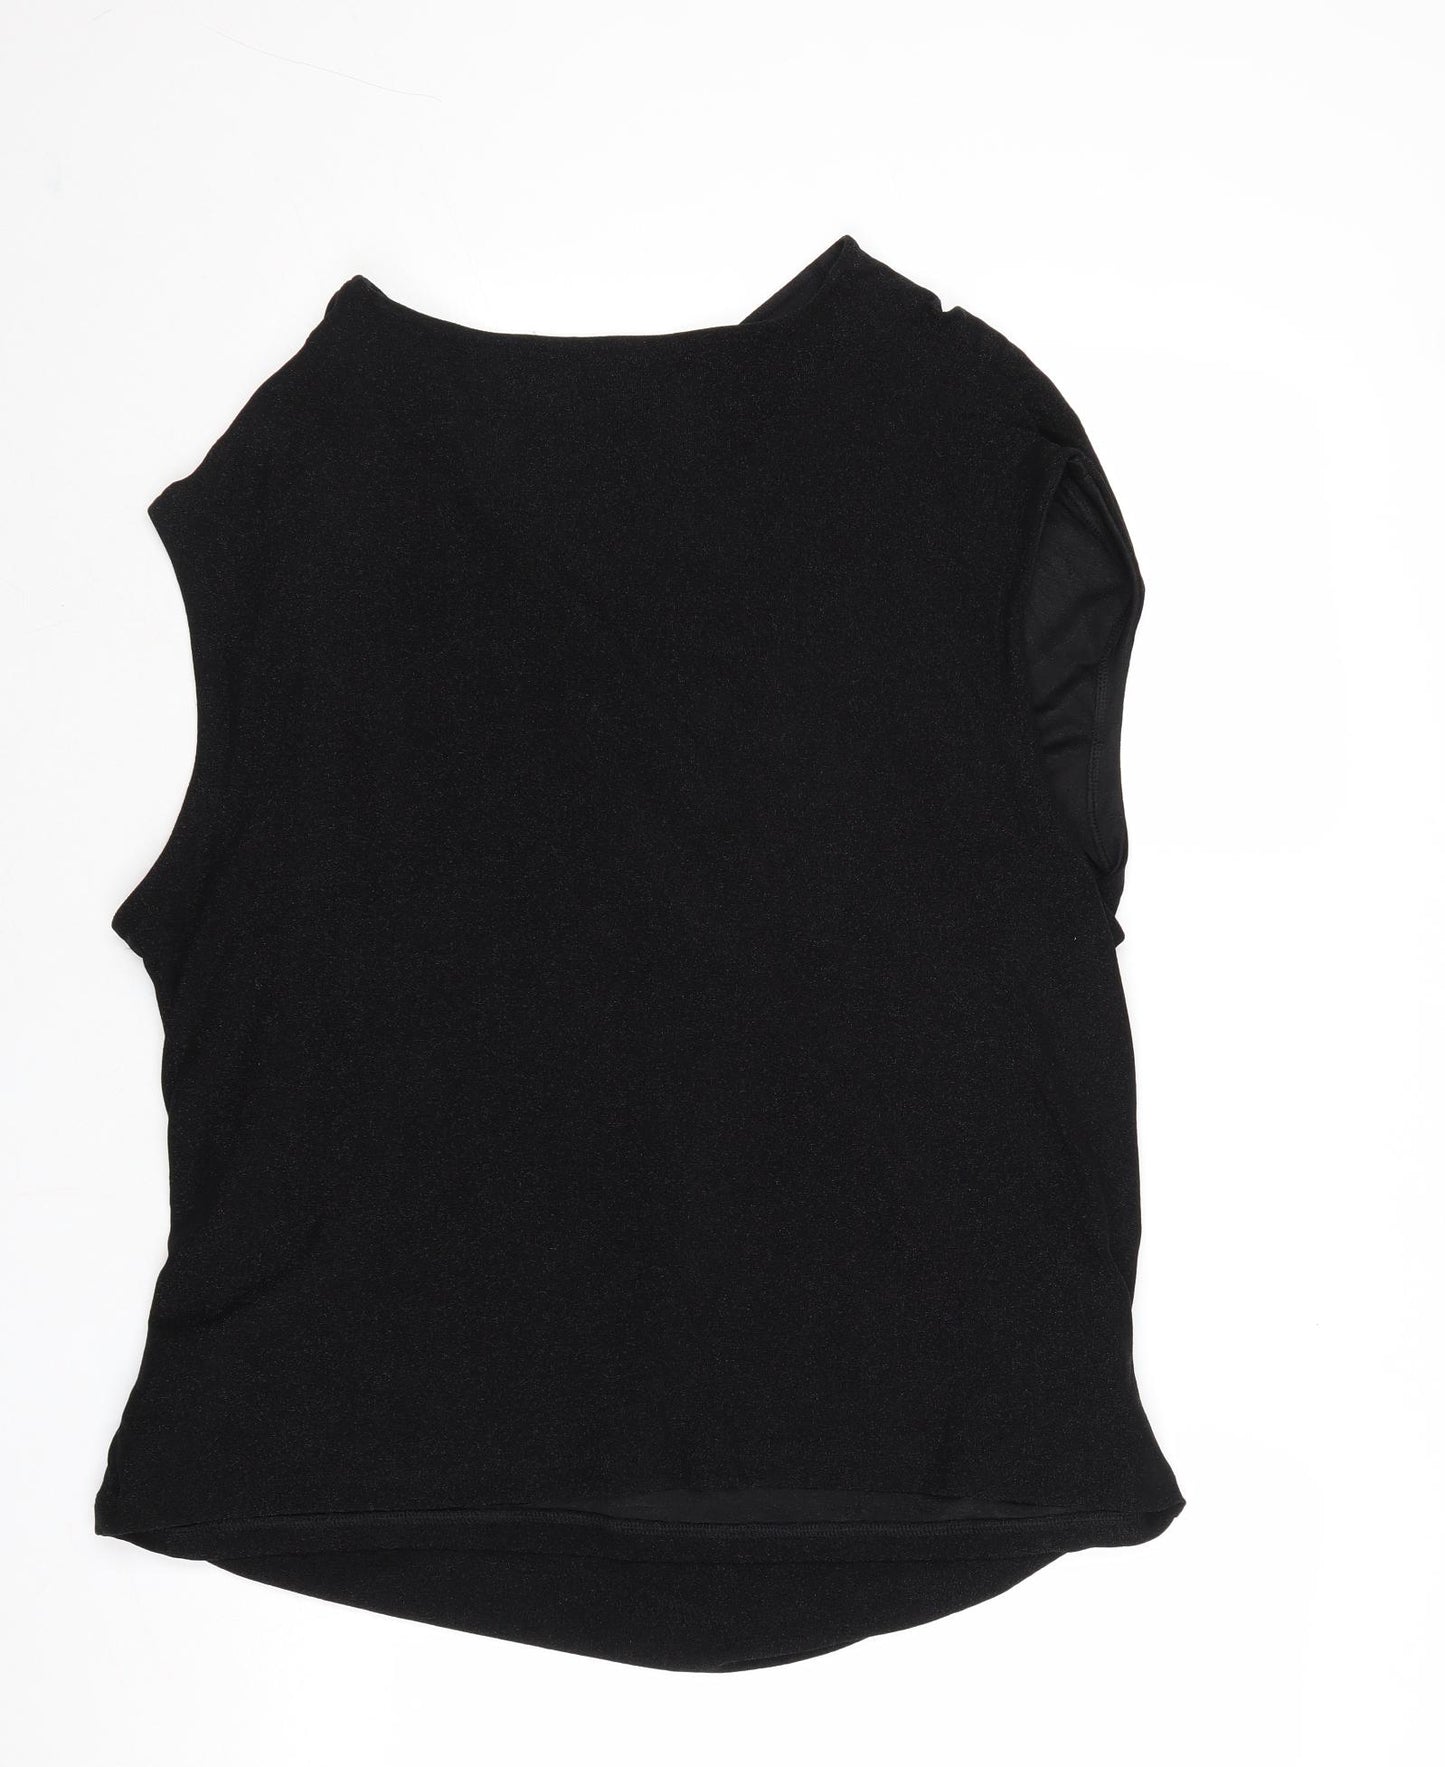 Marks and Spencer Womens Black Polyamide Basic T-Shirt Size 24 V-Neck - Ruched Front